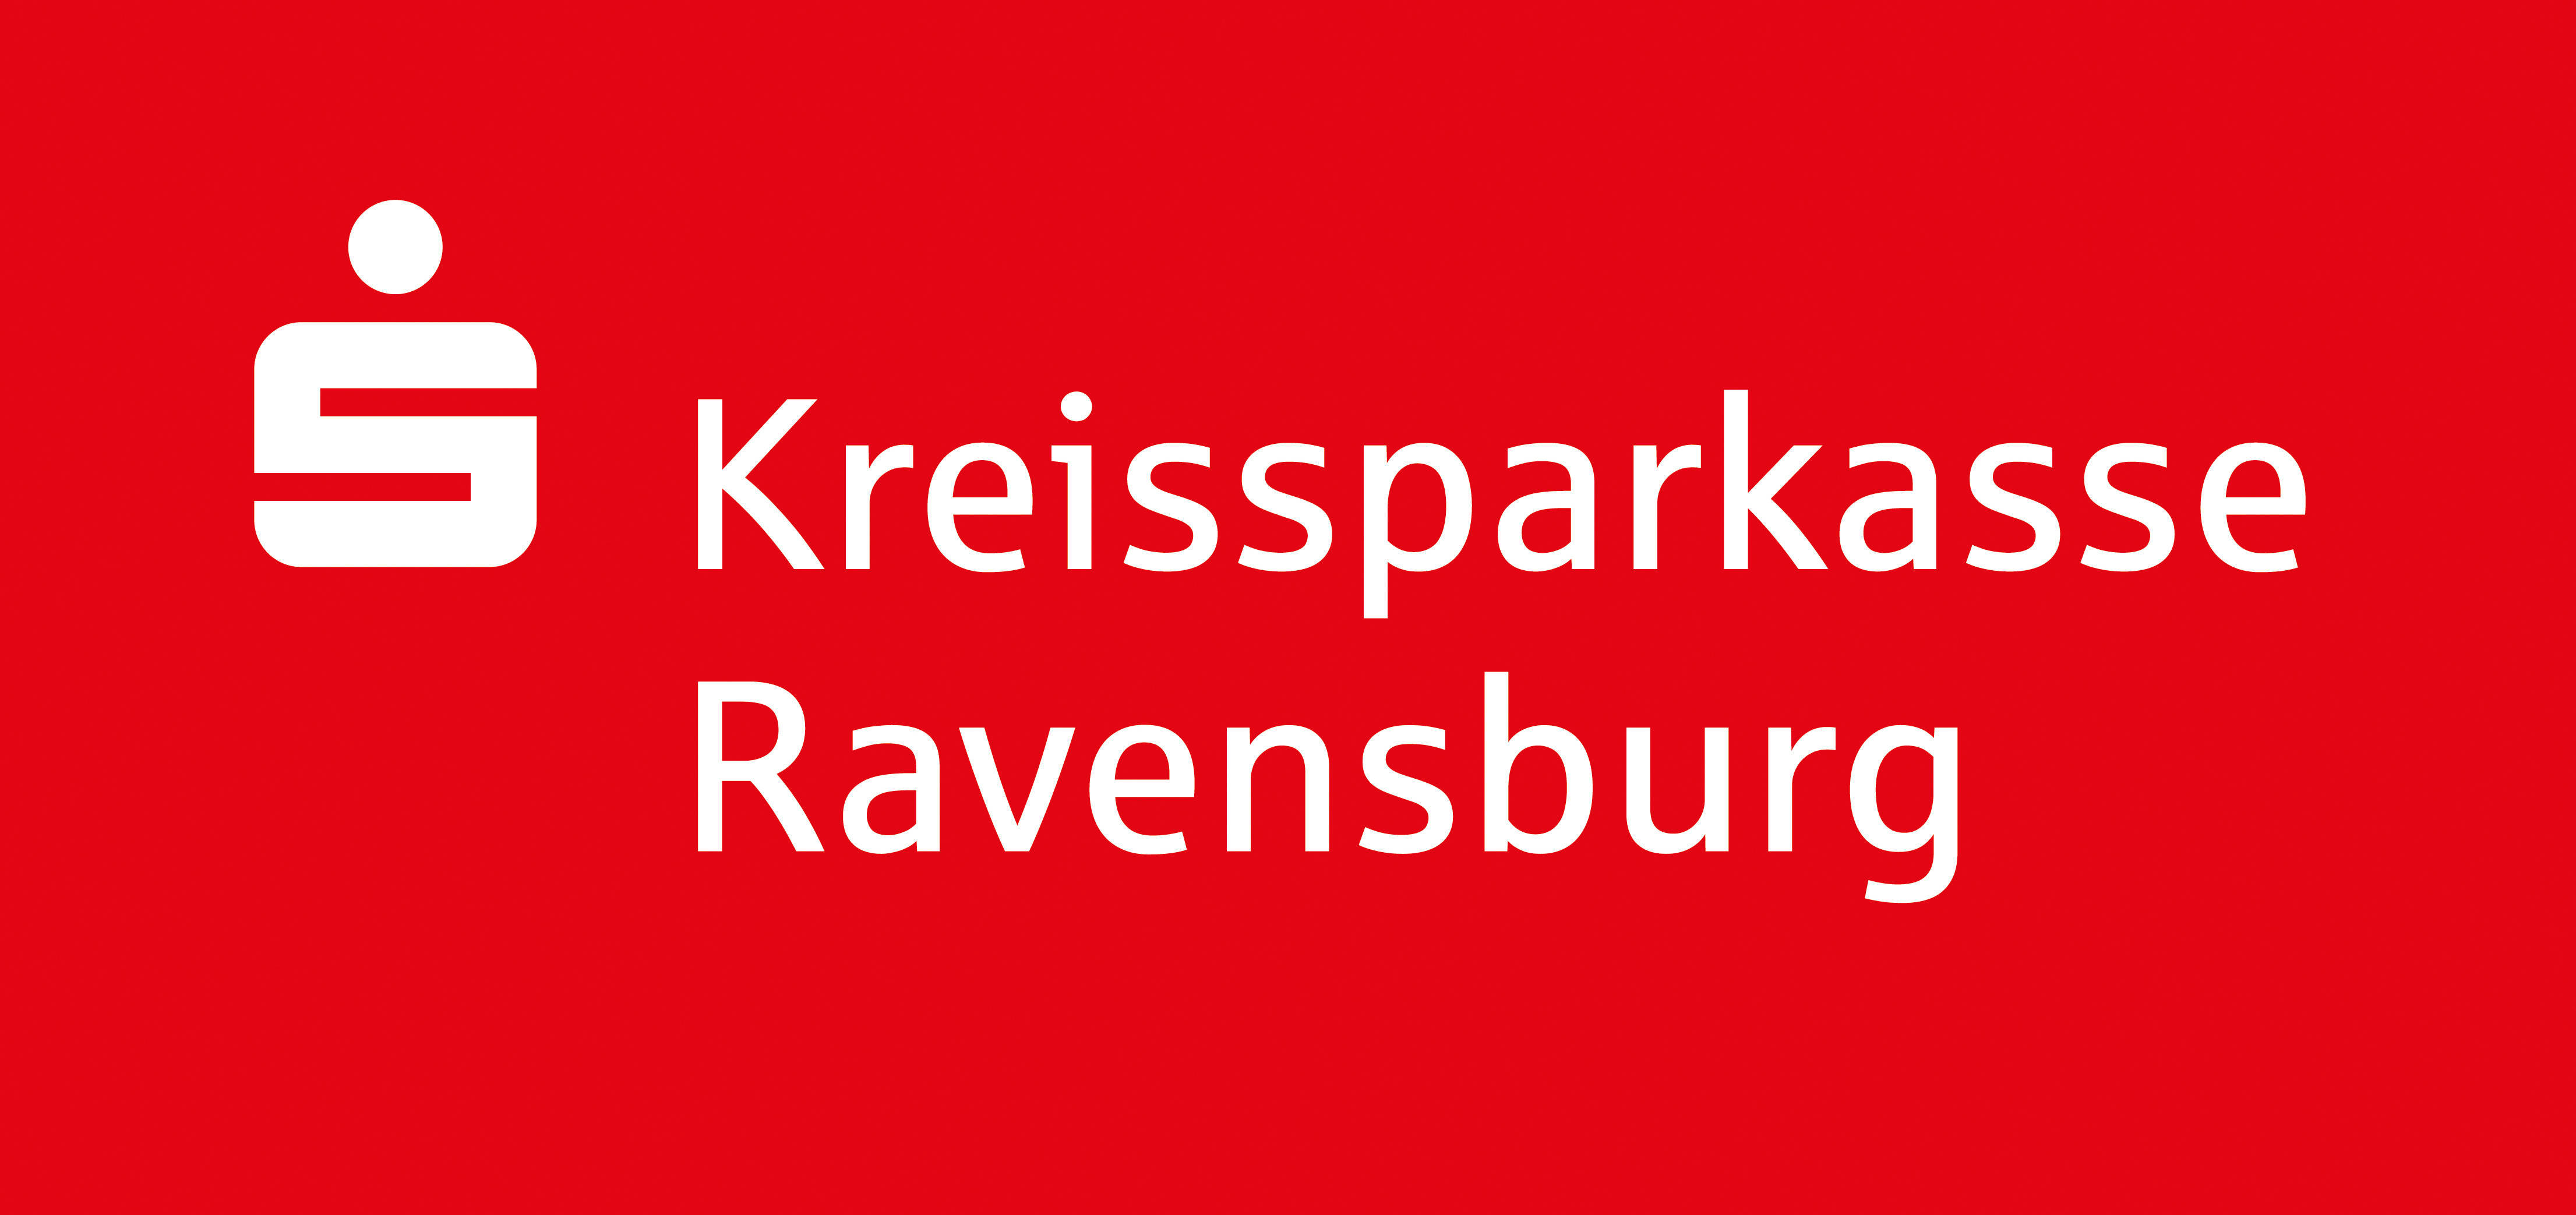   Kreissparkasse Ravensburg 